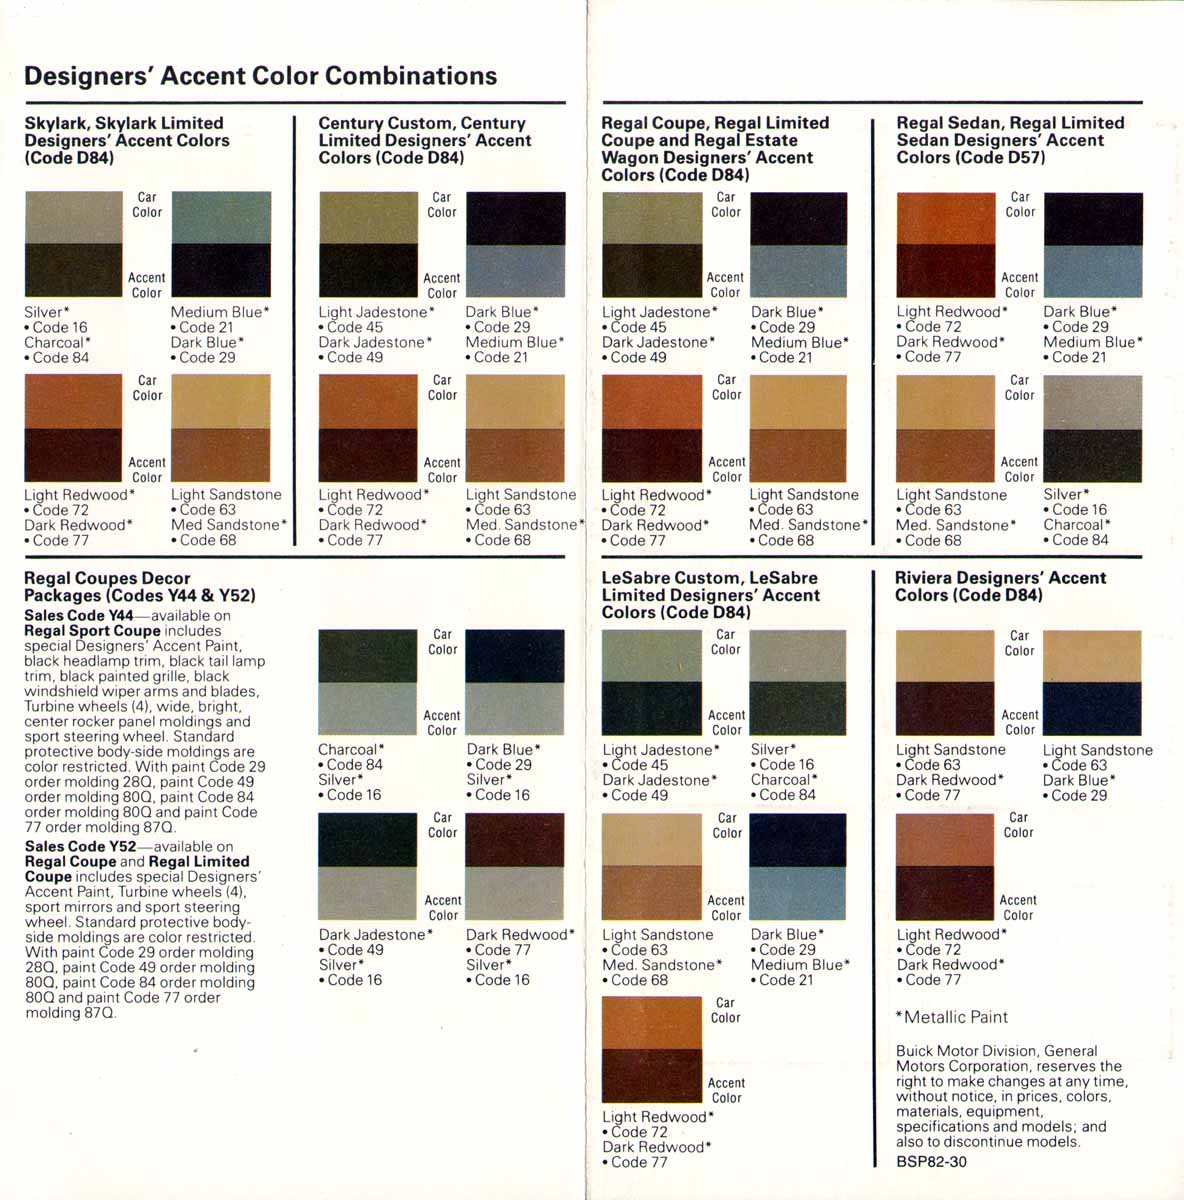 1982 Buick Exterior Colors Chart-05-06